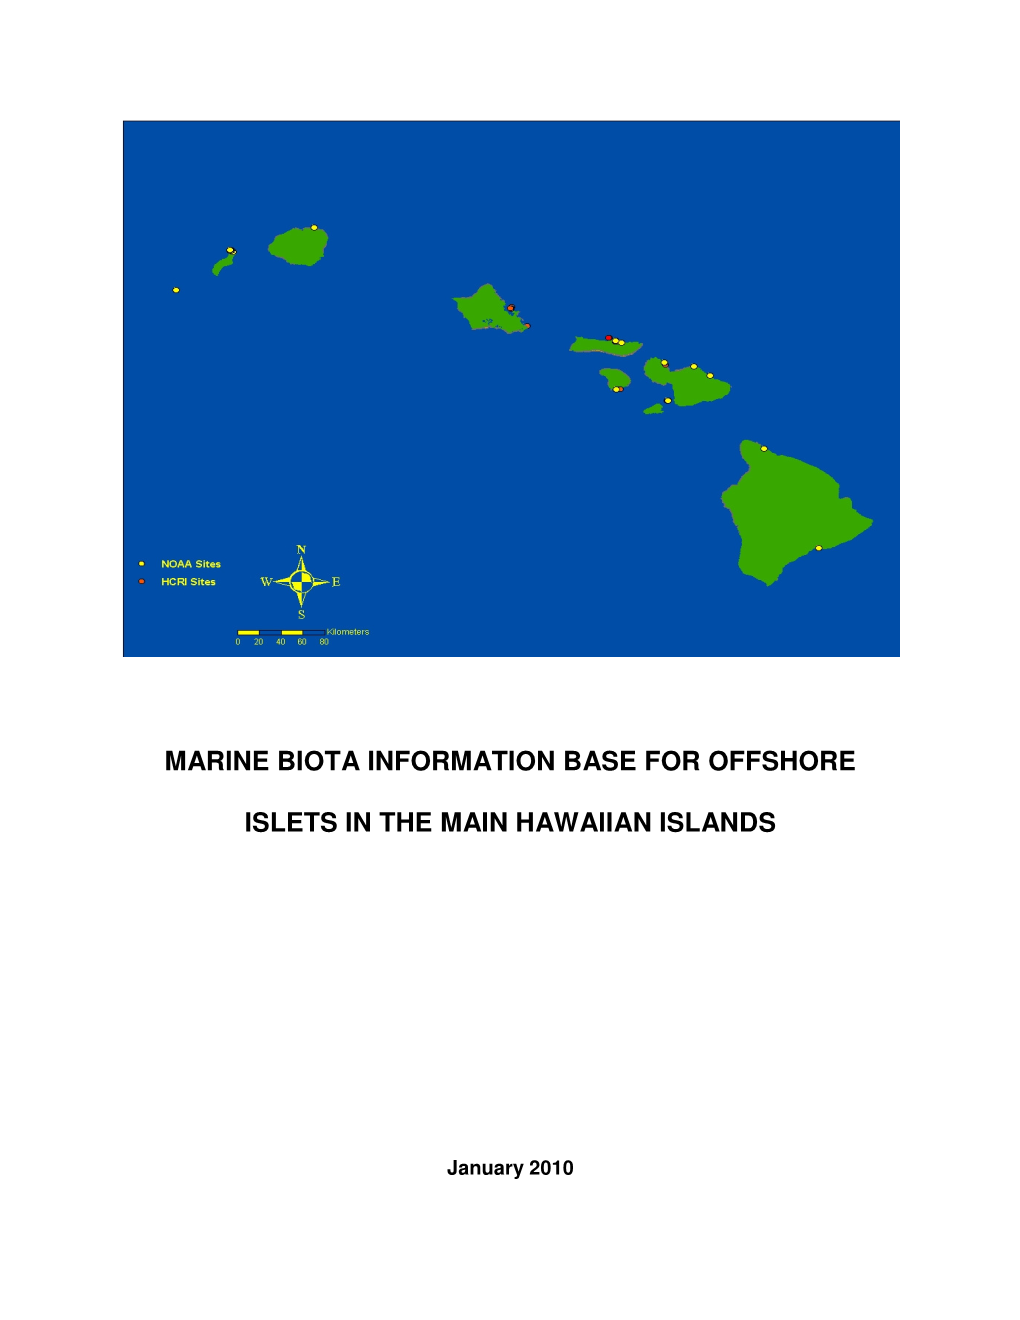 Marine Biota Information Base for Offshore Islets in the Main Hawaiian